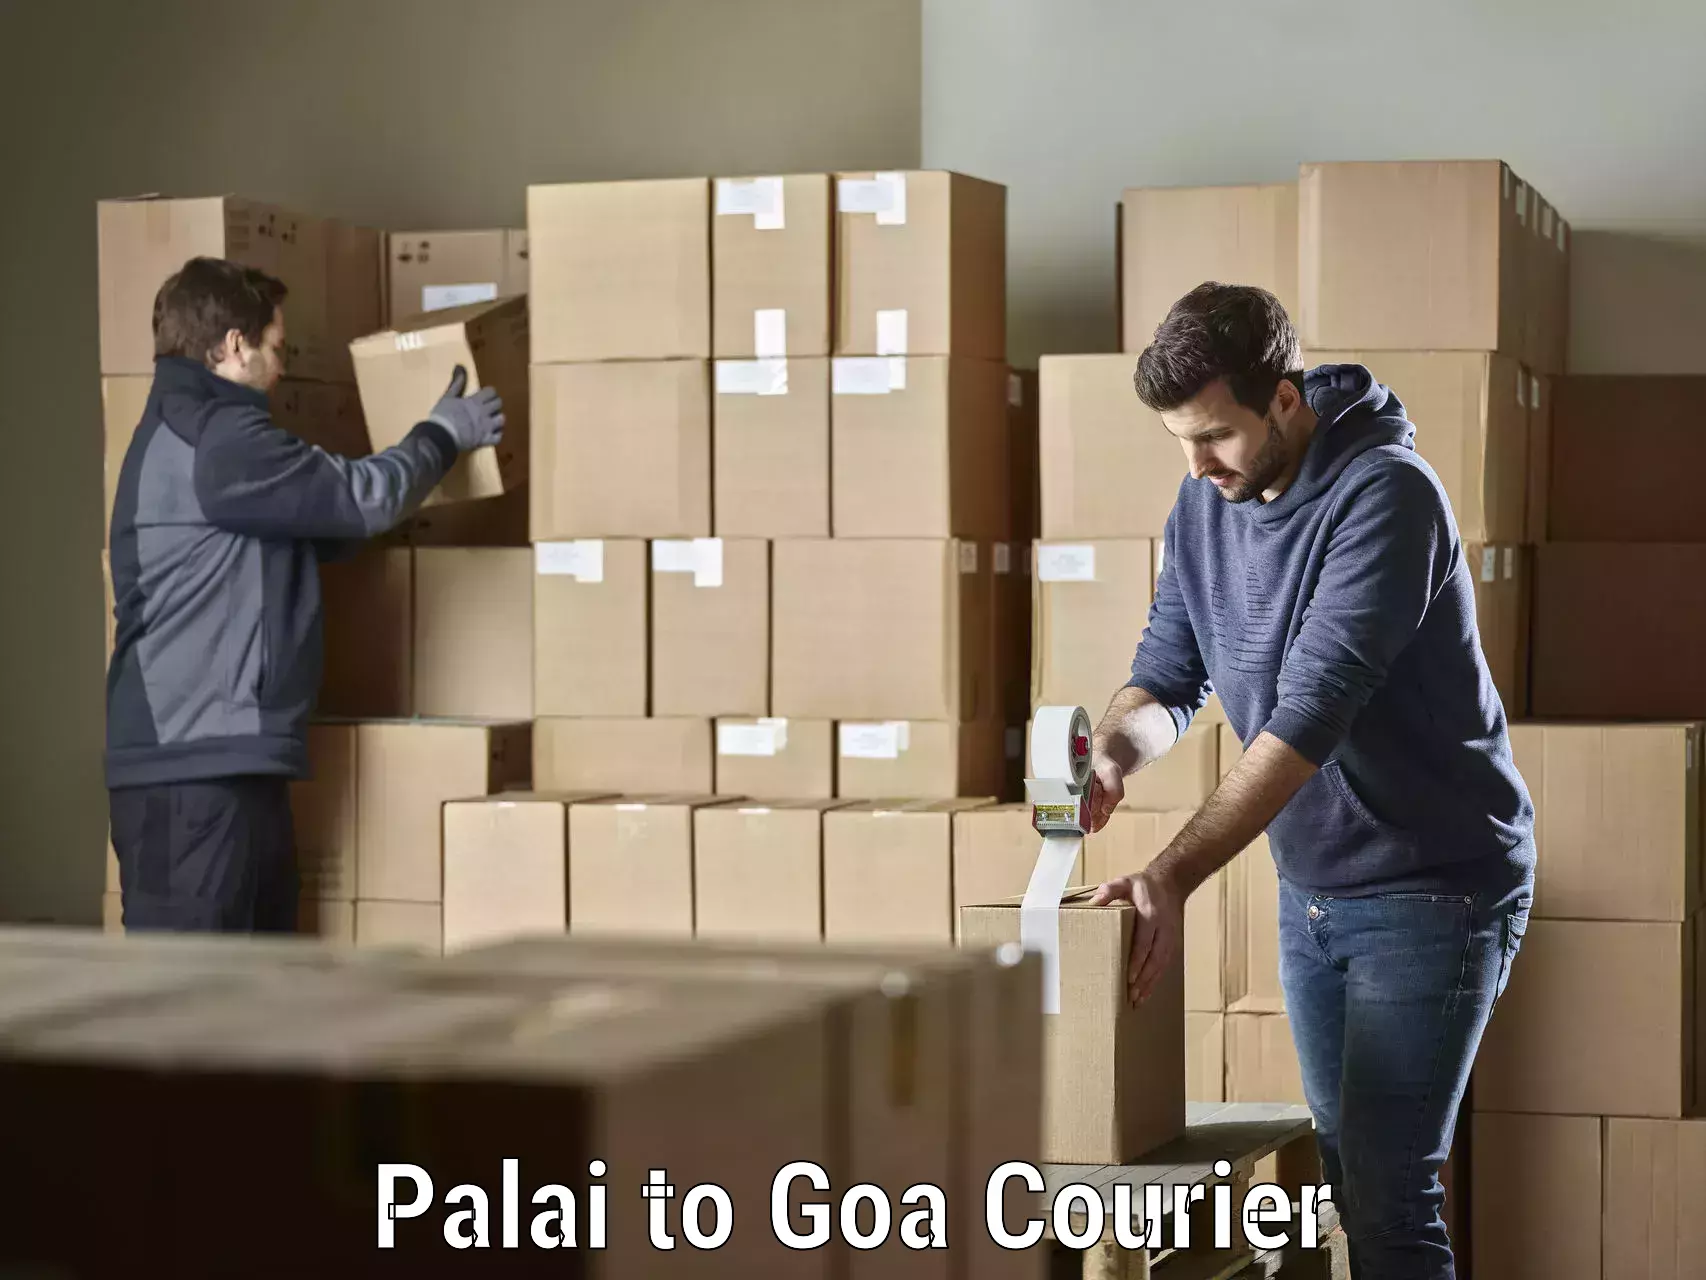 Efficient order fulfillment Palai to Goa